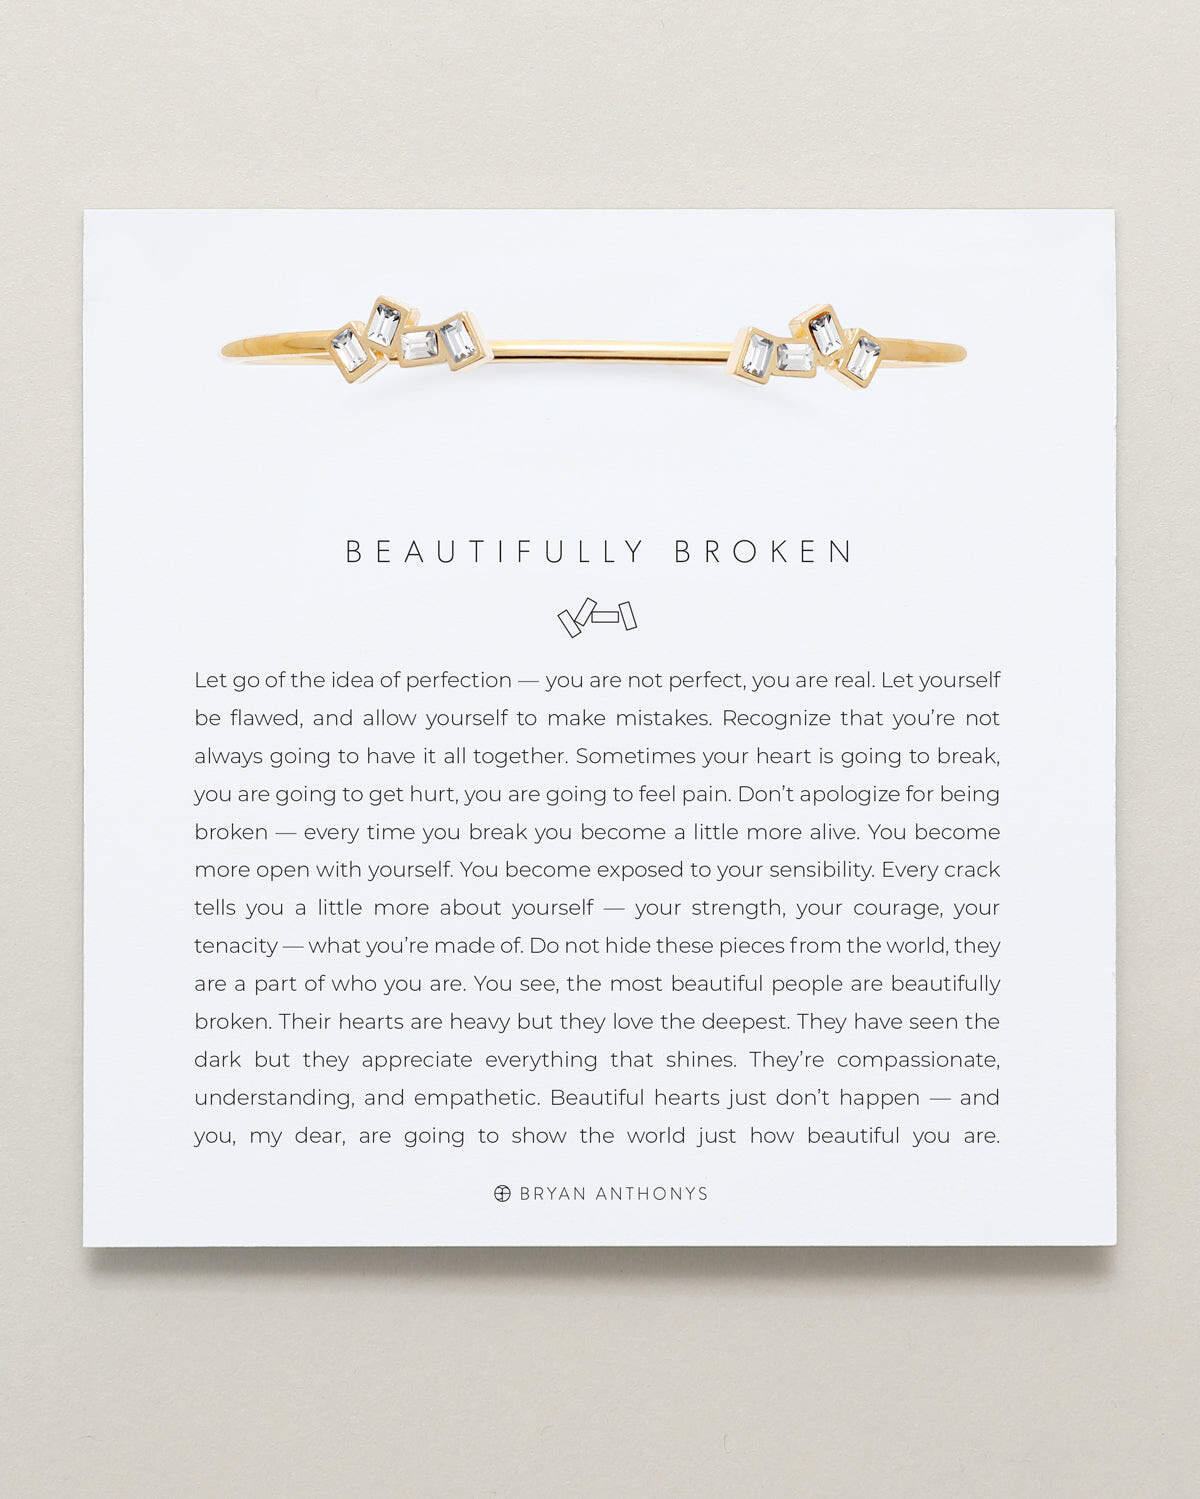 Bryan Anthony’s Beautifully Broken Bracelet